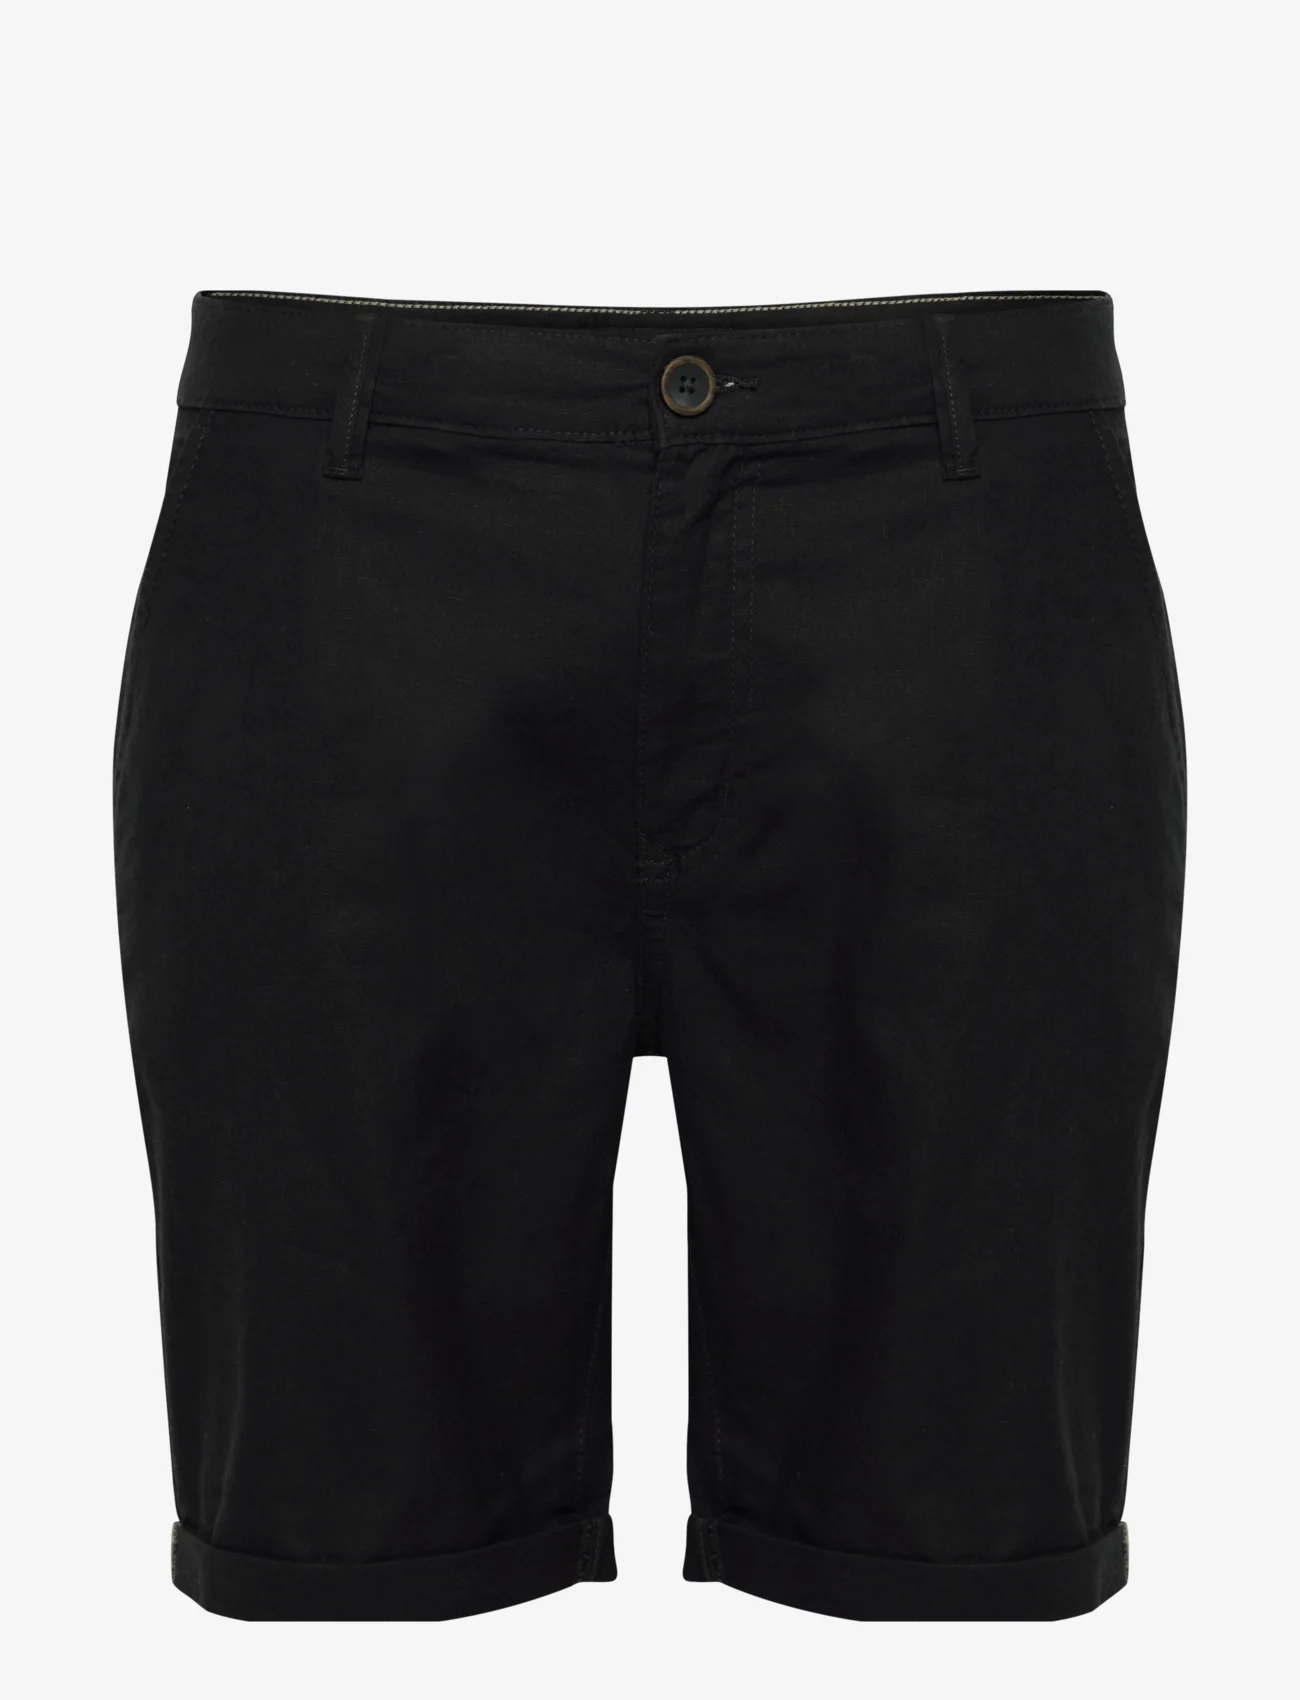 Blend - Shorts - linneshorts - black - 0